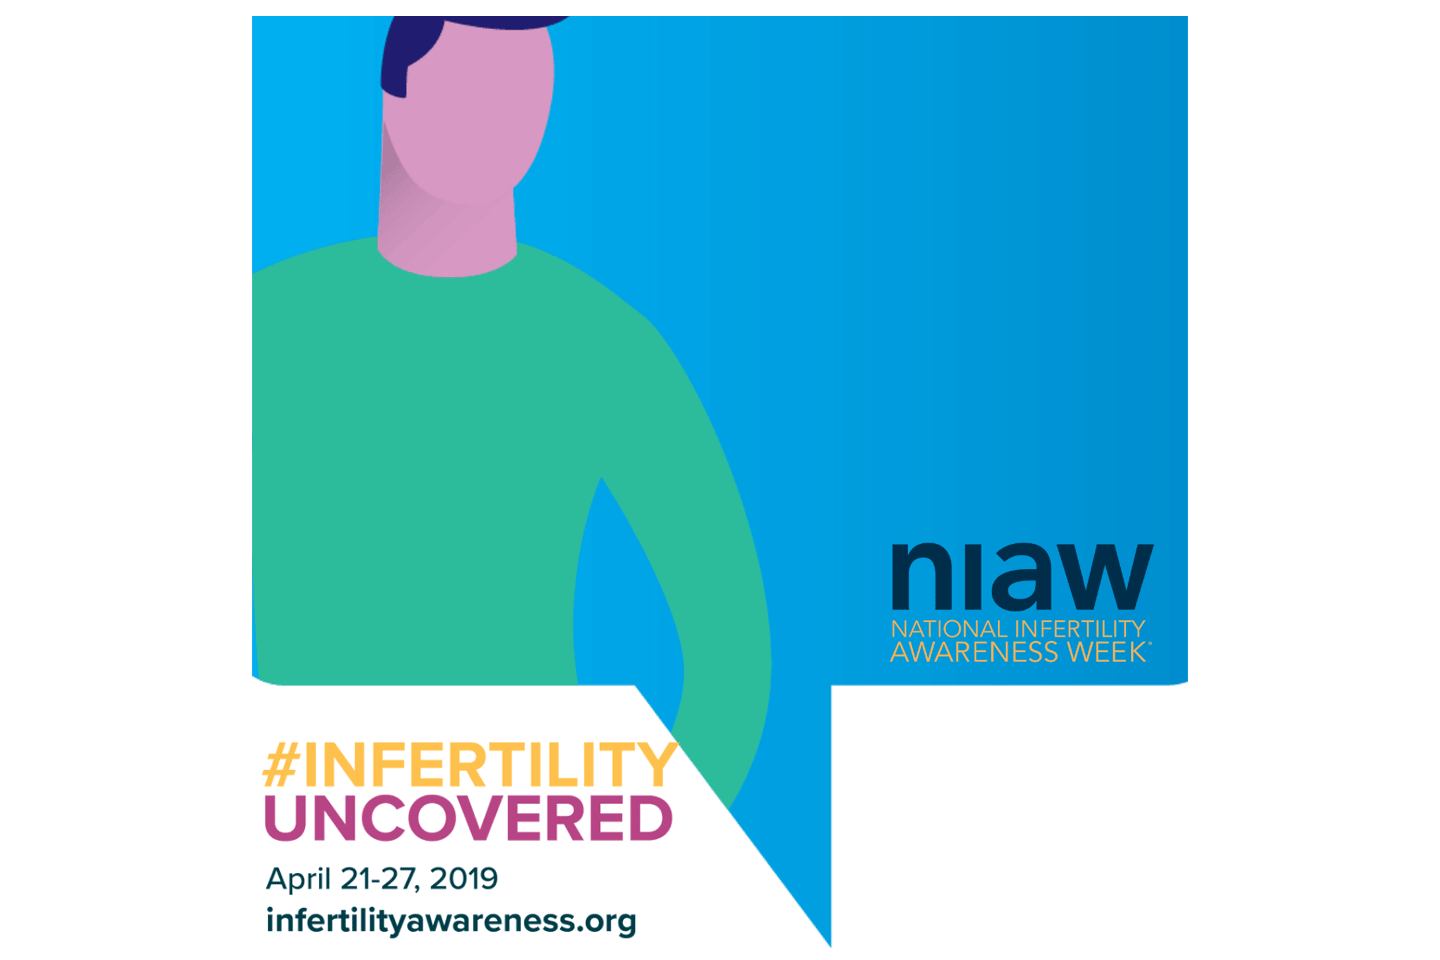 NIAW: National Infertility Awareness Week; #infertilityuncovered April 21-27, 2019 infertilityawareness.org